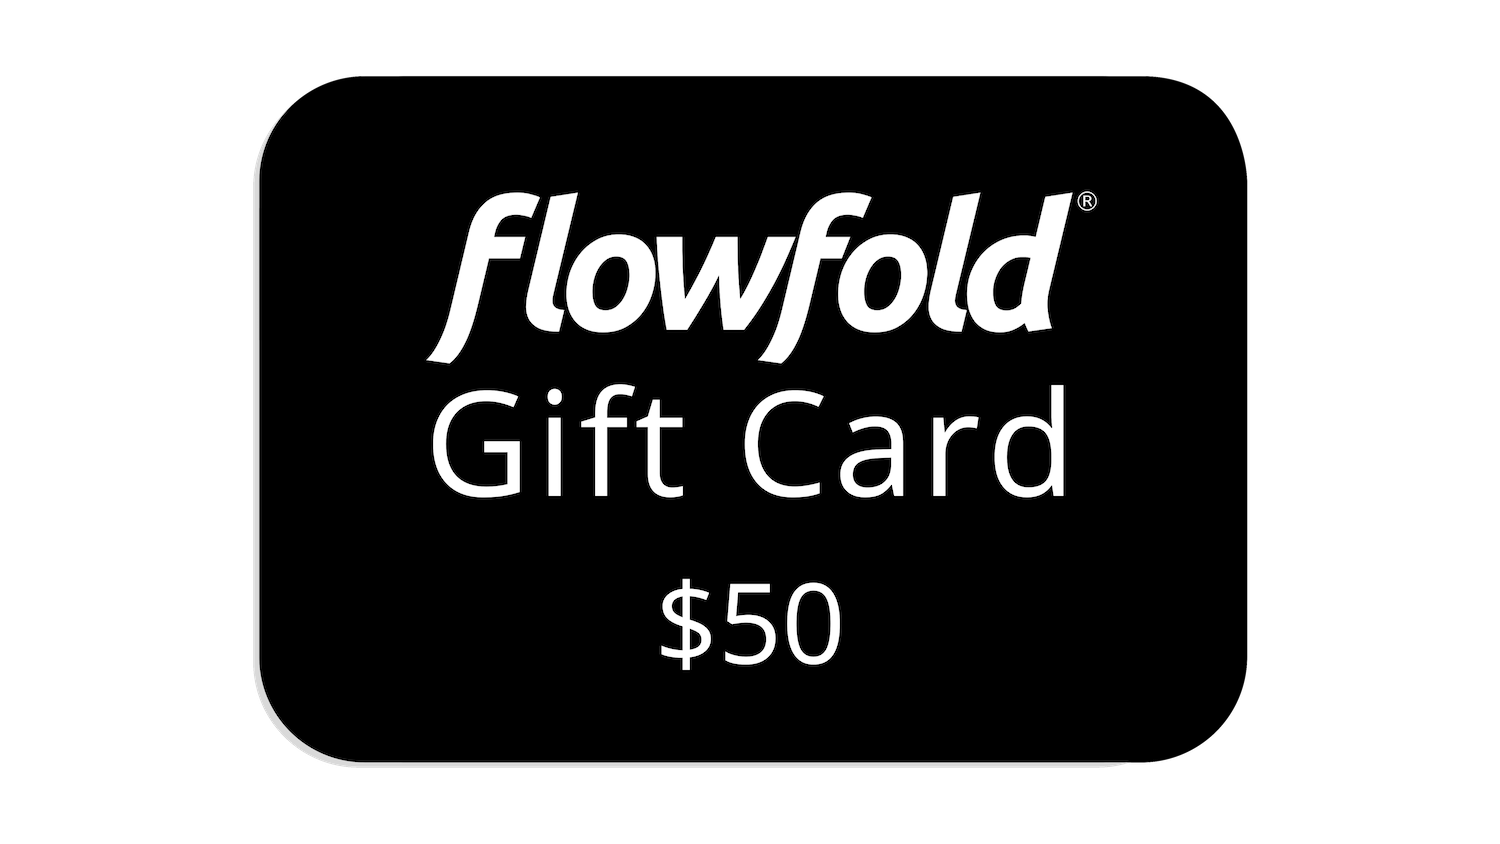 Flowfold Gift Card